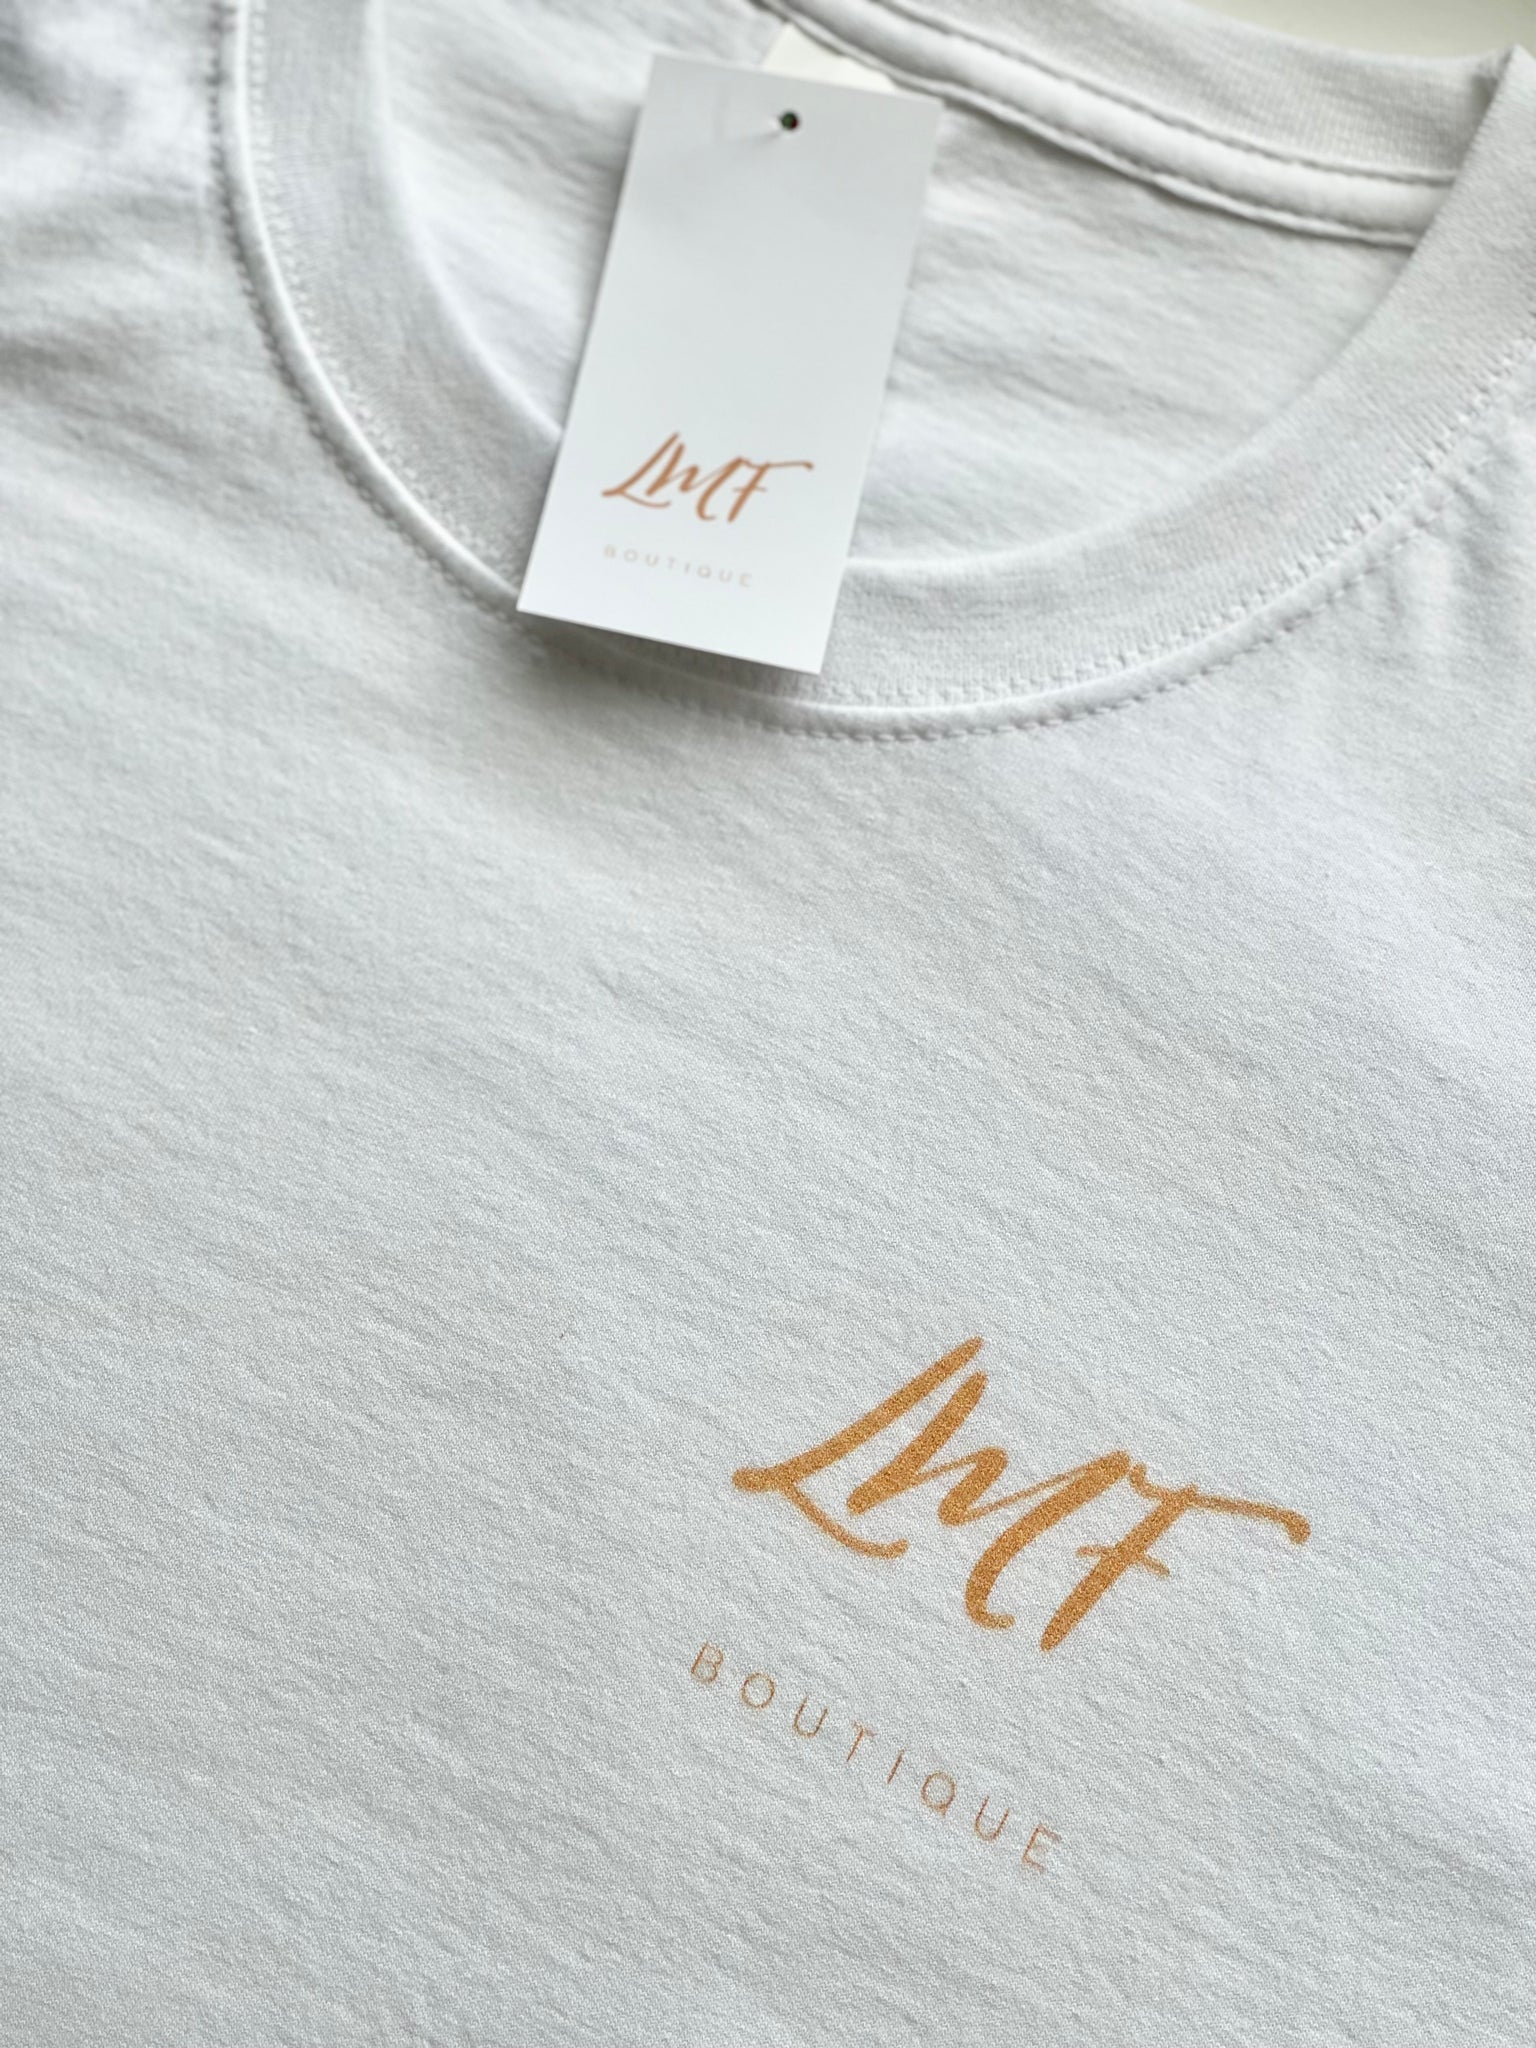 (#62) LMF boutique White T-Shirt - NEW